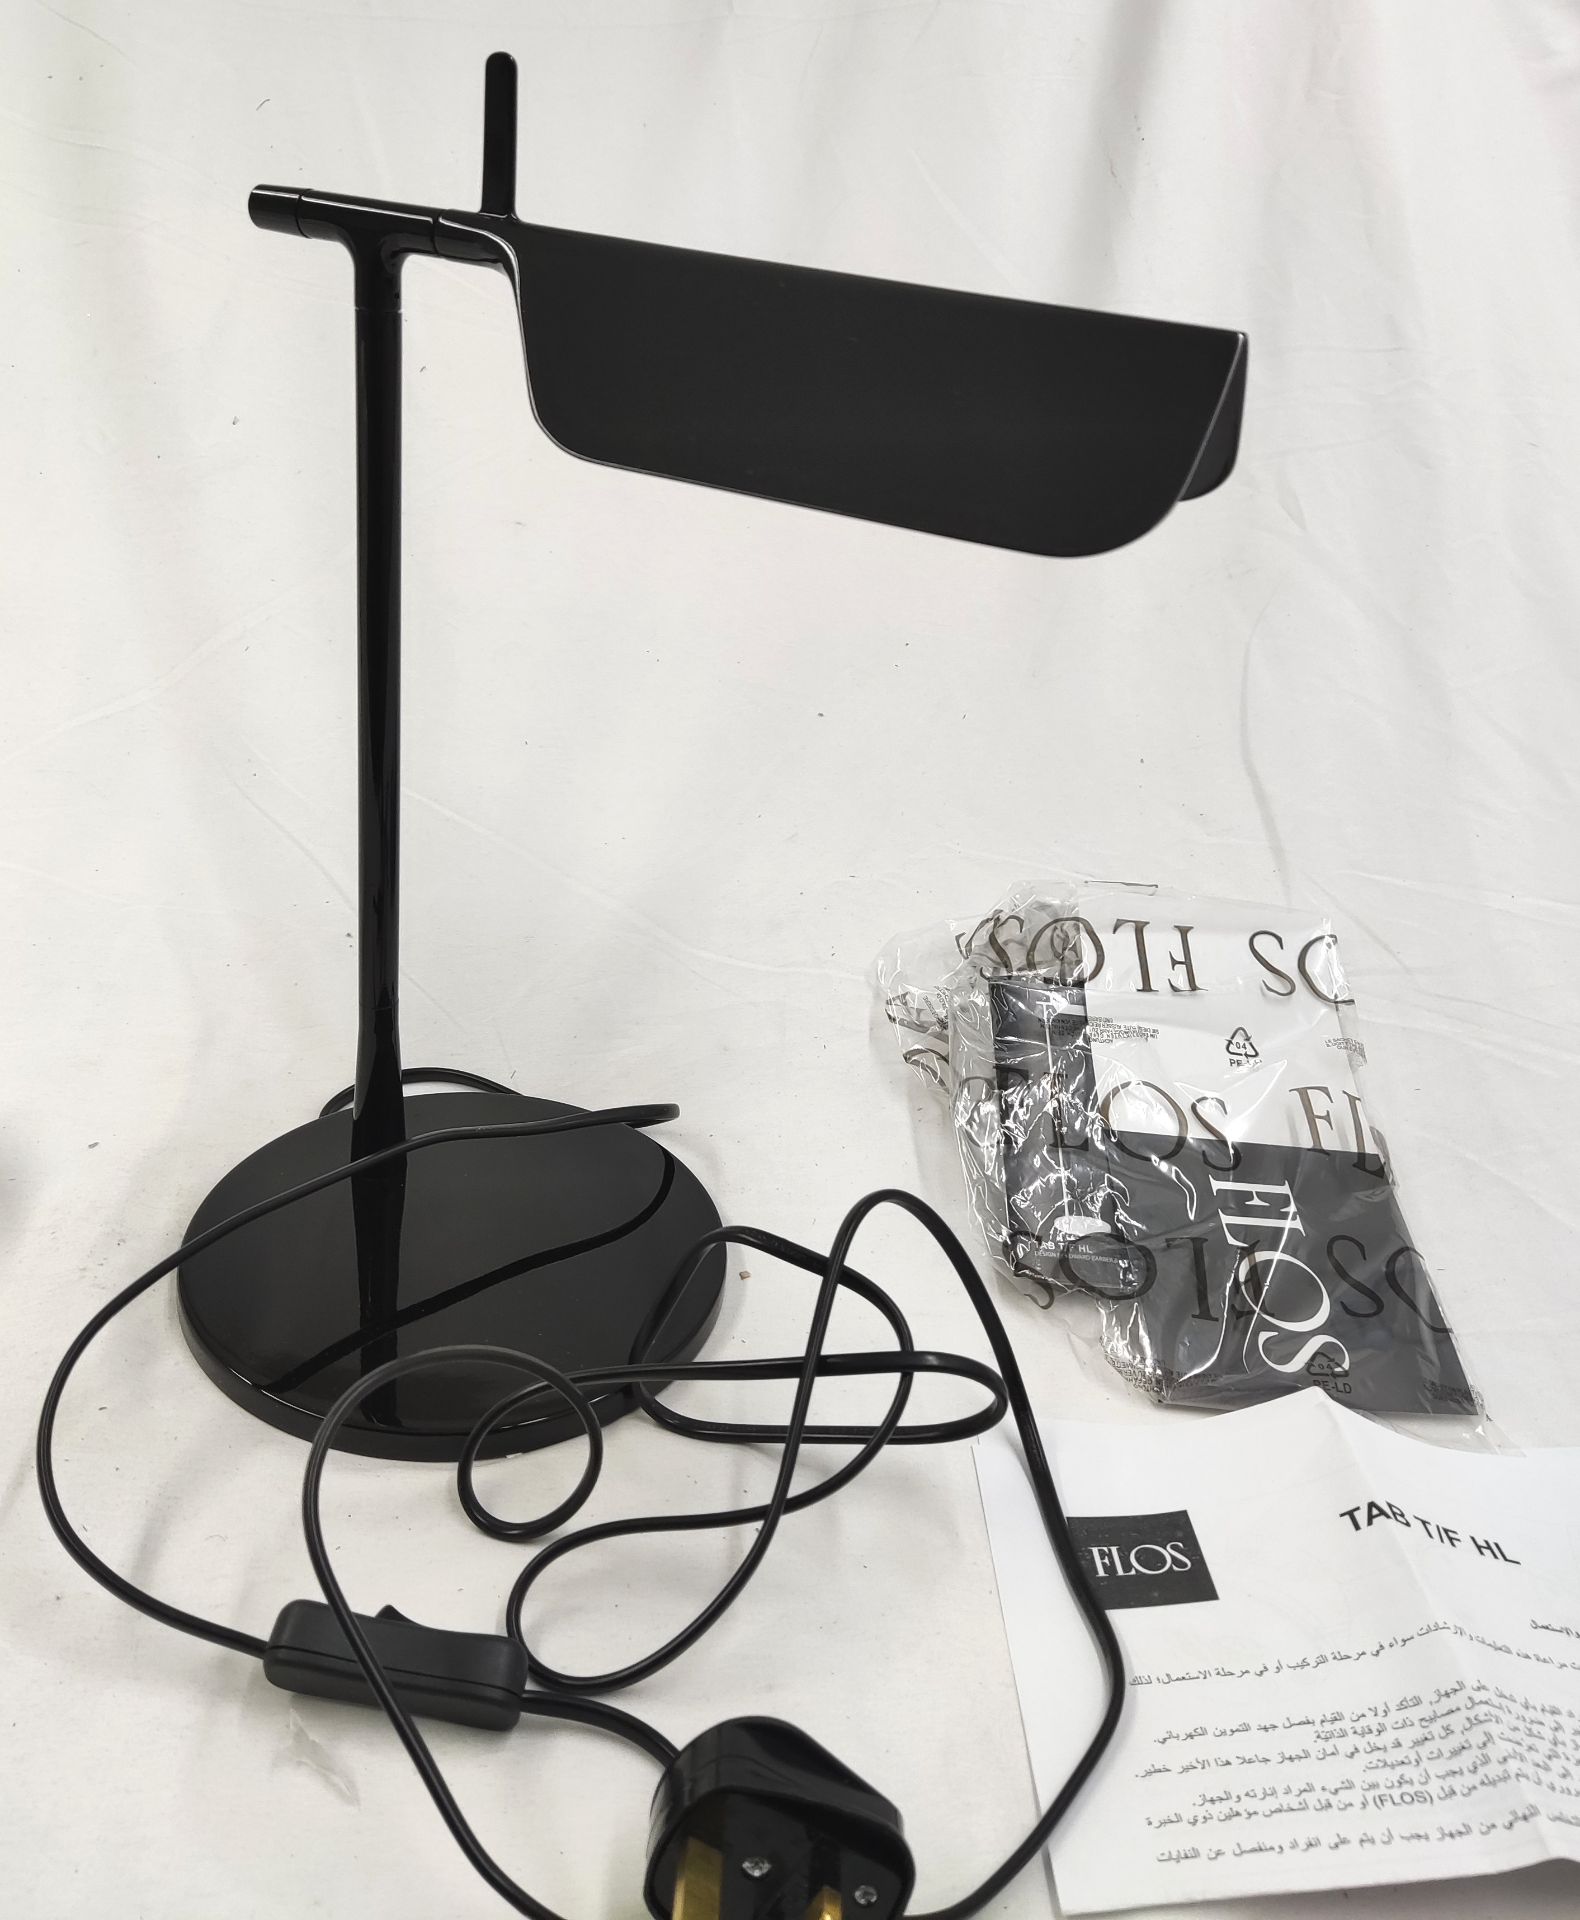 1 x FLOS Tab T Table Lamp With Adjustable Head - F6550330 - RRP £310 - Ref: ATR177-1/ATRPD - - Image 7 of 12